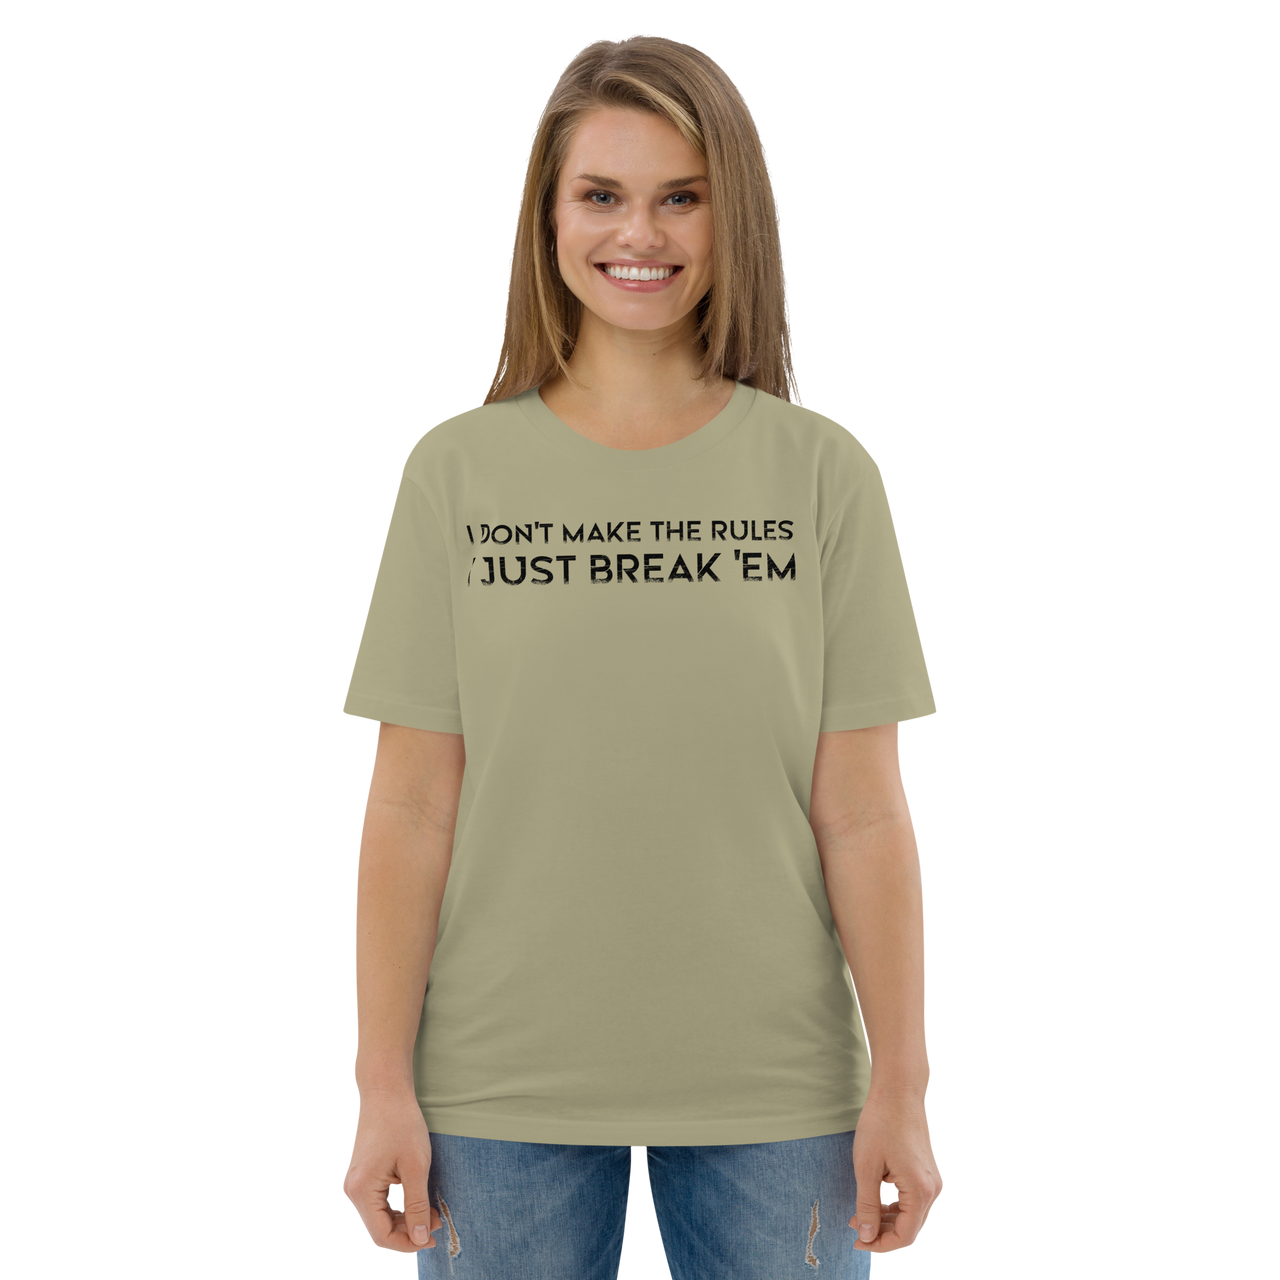 I Don't Make The Rules, I Just Break 'Em - Sarcastic Humor Short Sleeve T-shirt